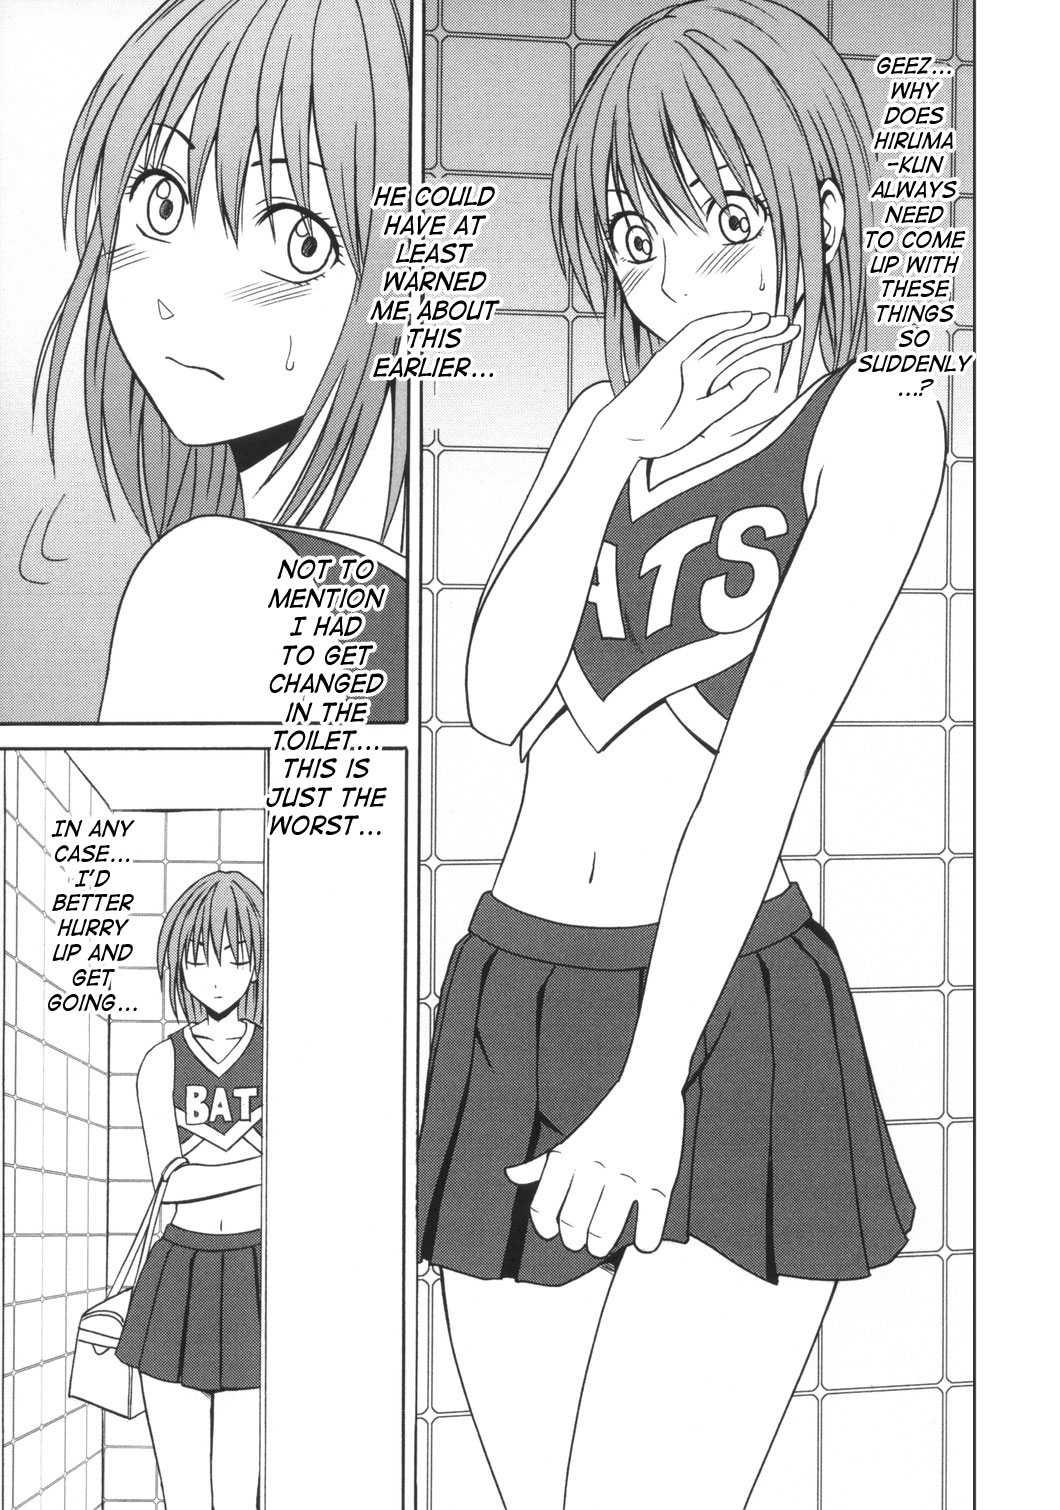 Yuri rape manga